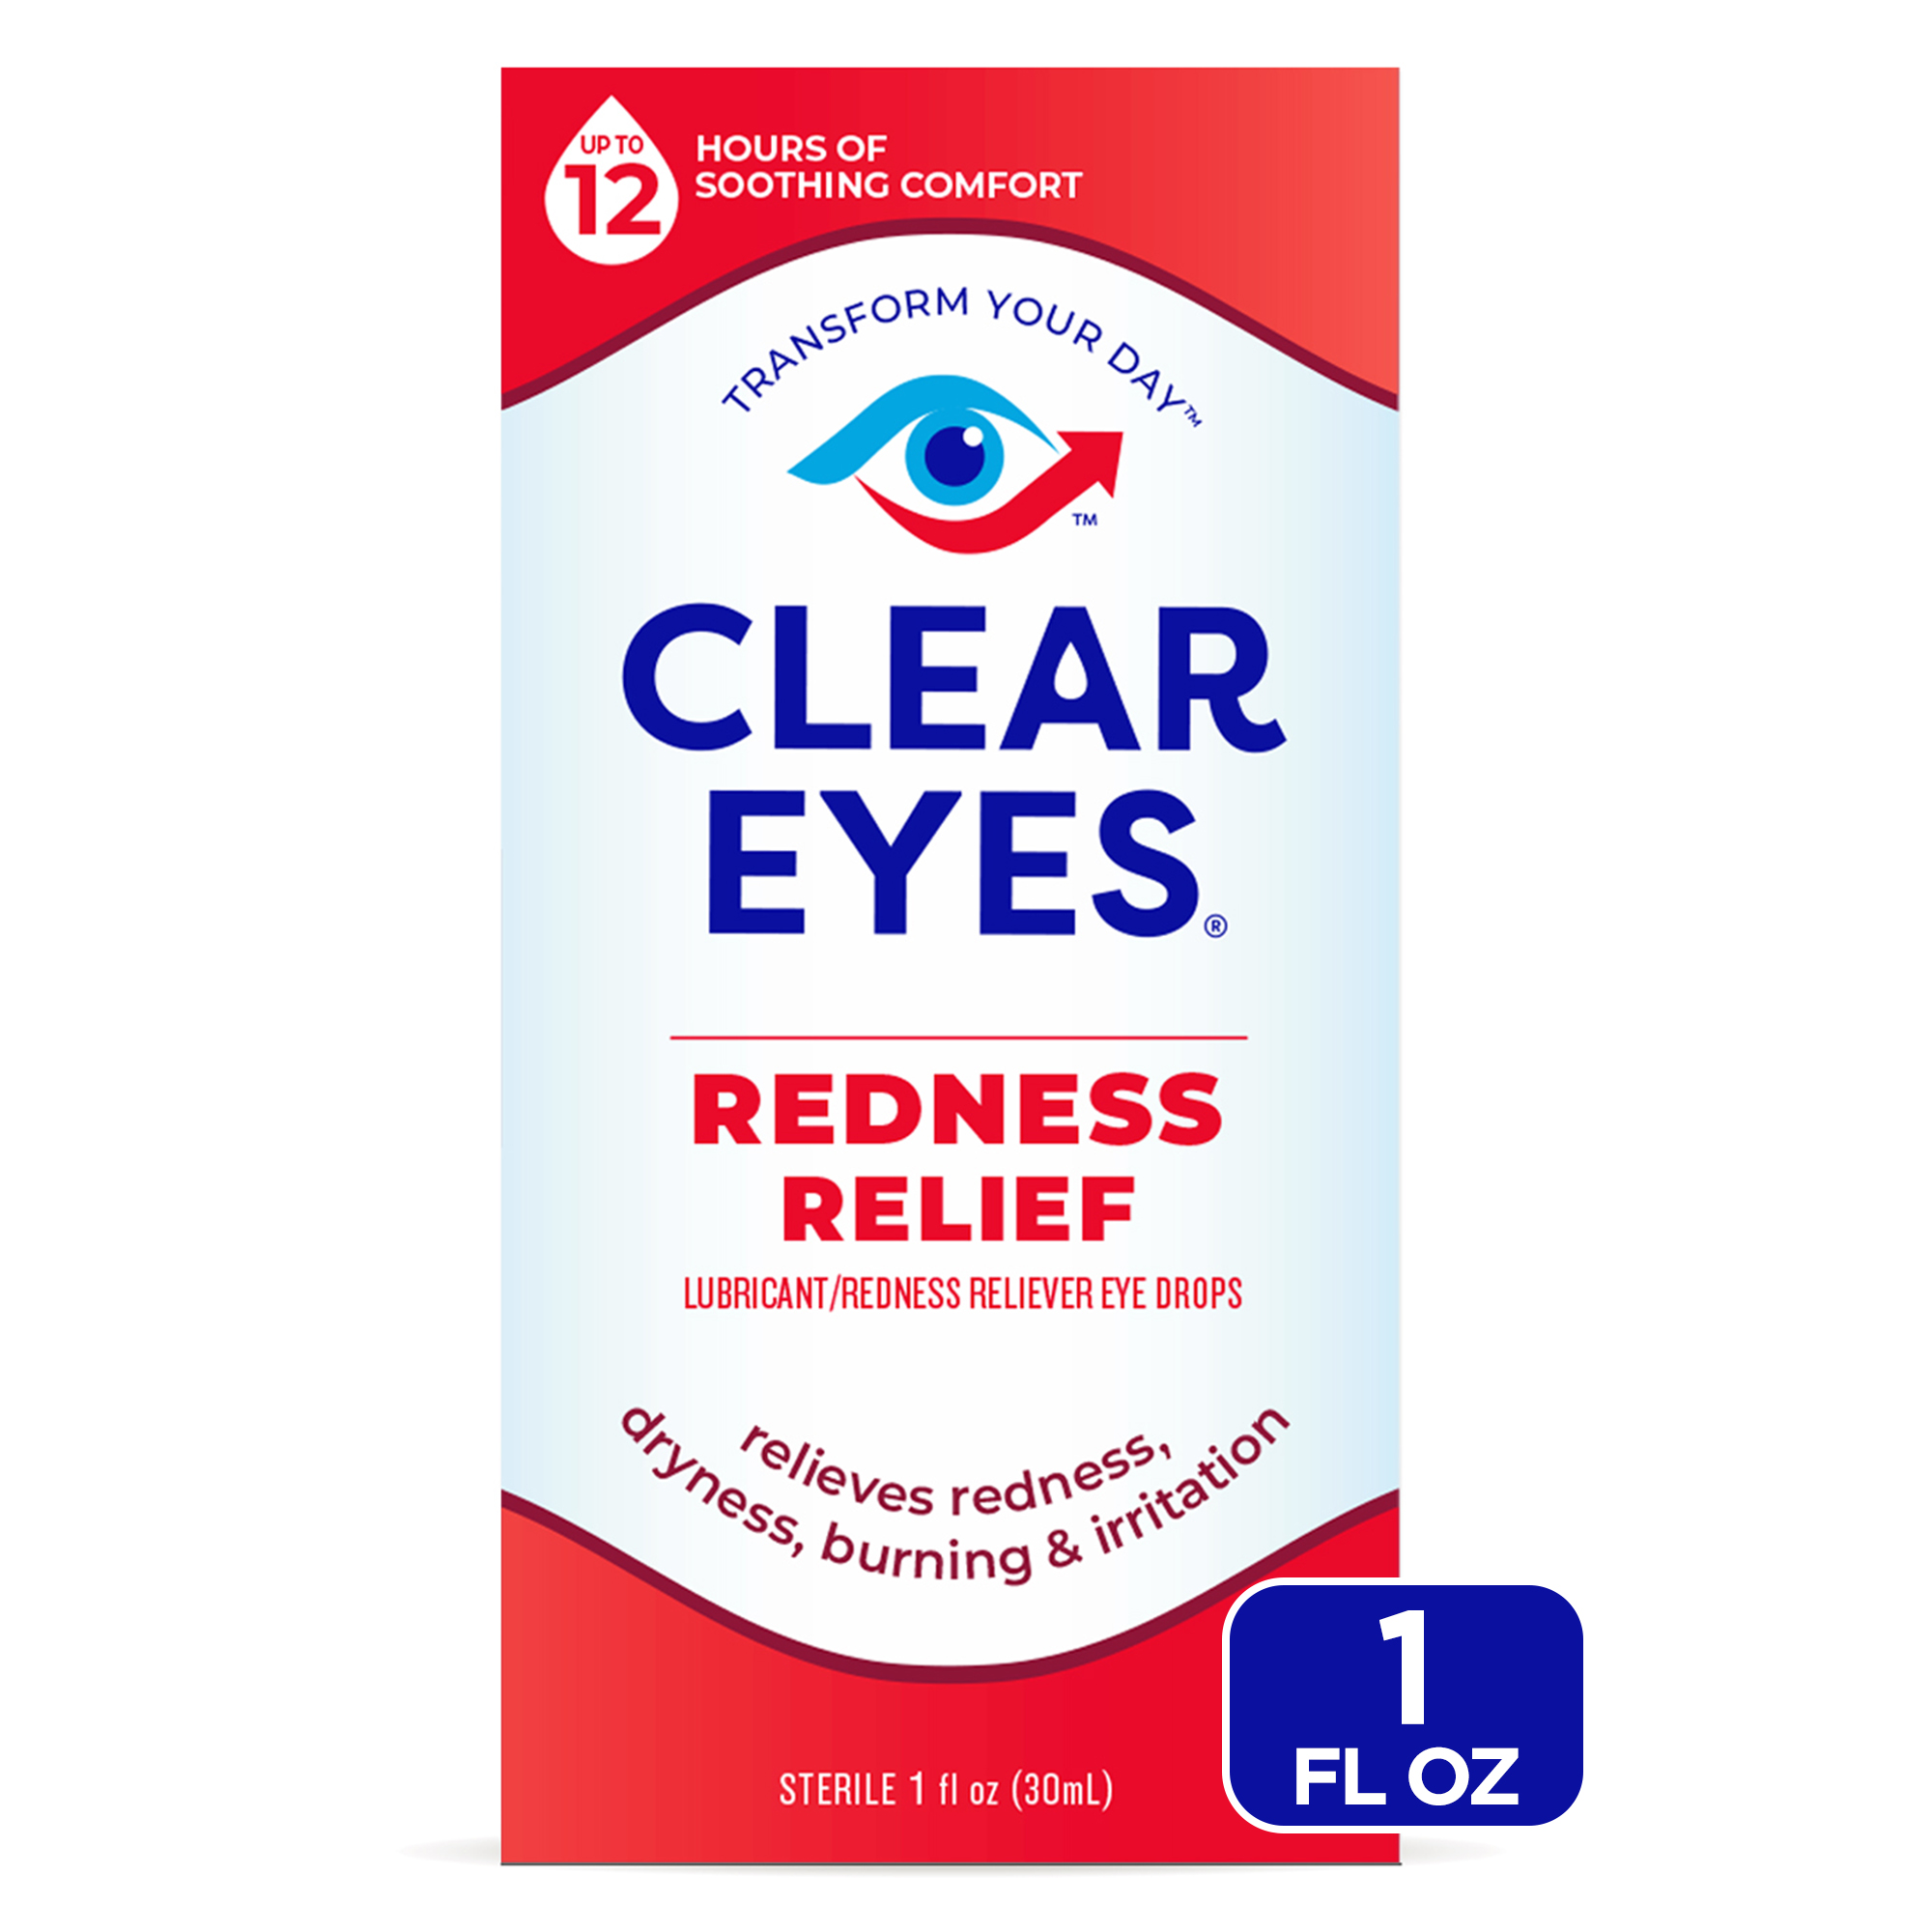 Clear Eyes Redness Eye Relief Lubricant Eye Drops, 1.0 fl oz - image 1 of 13